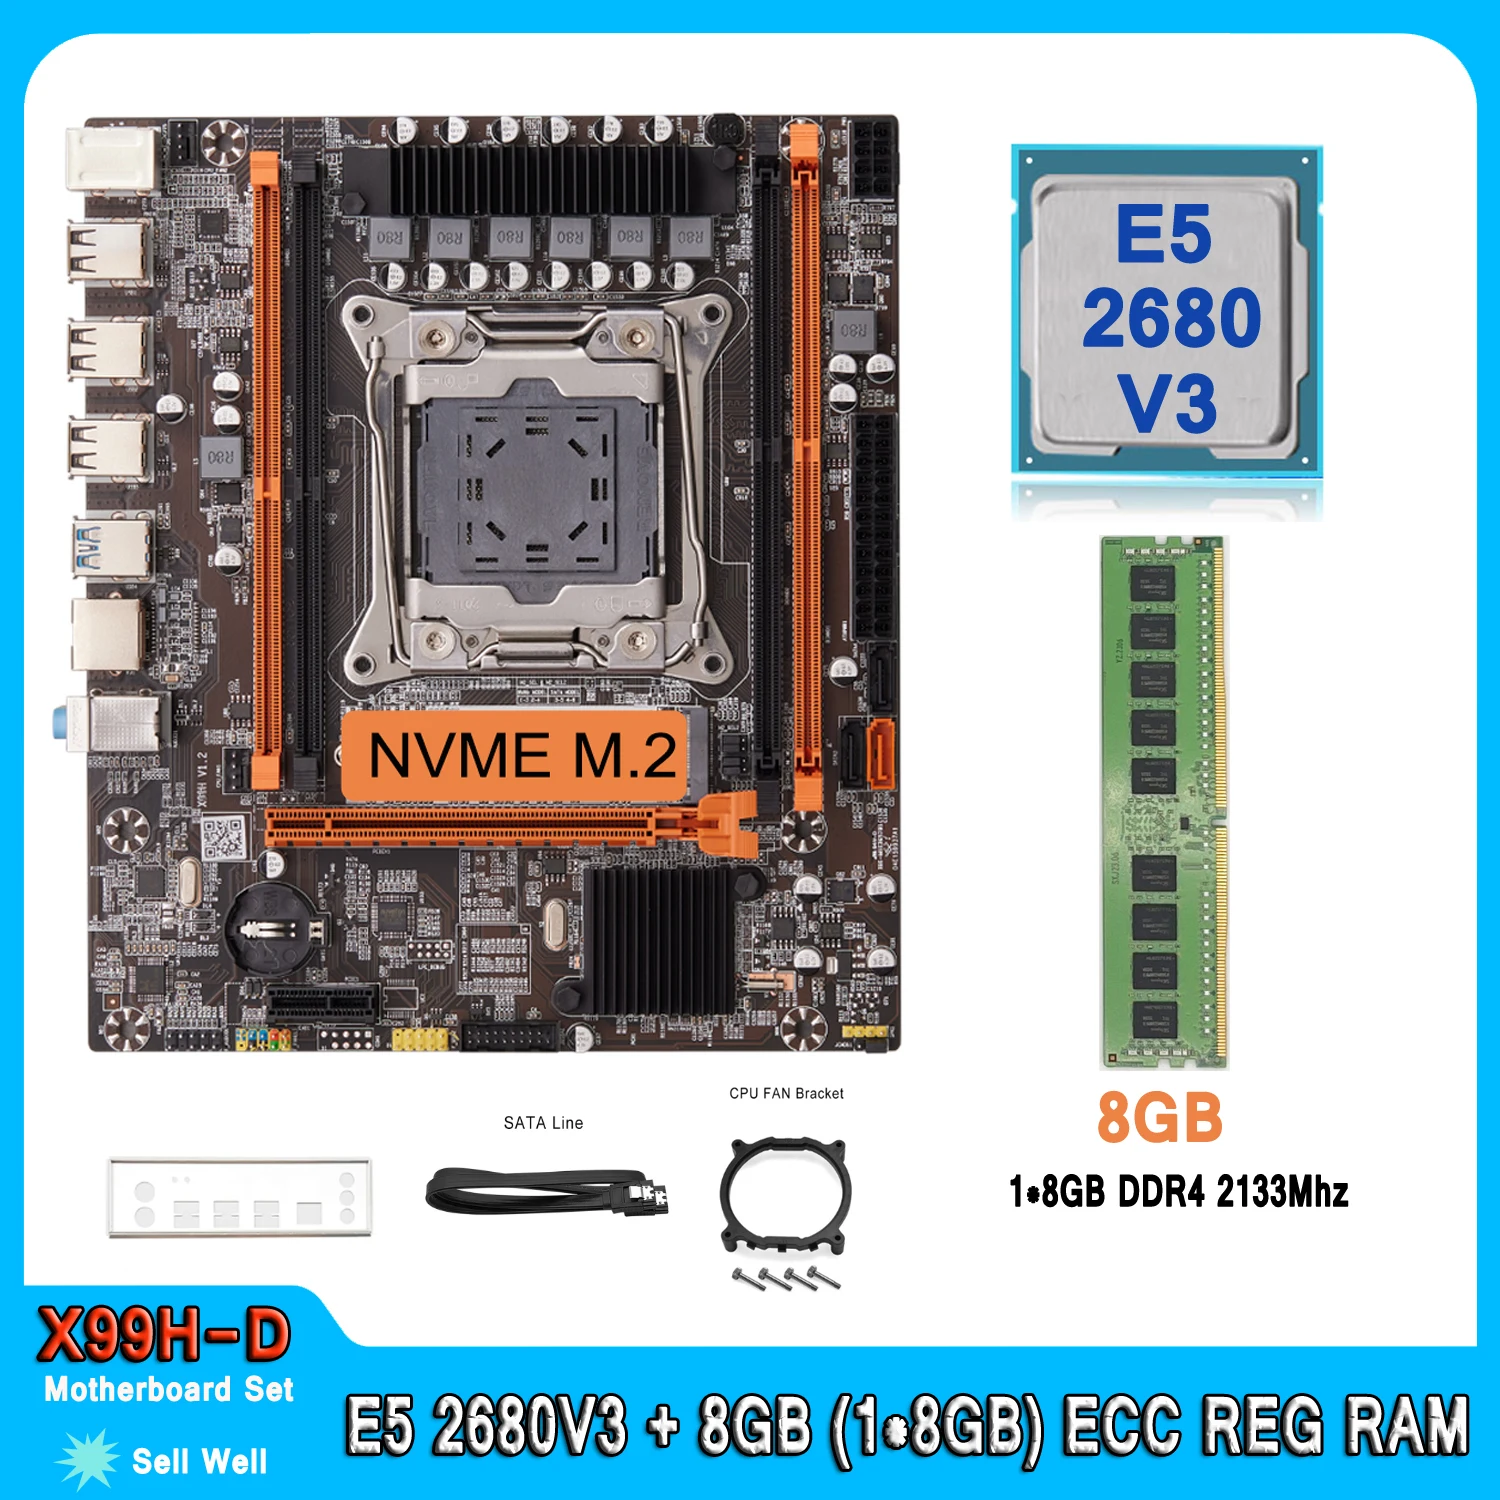 

X99 Motherboard Set Kit With LGA2011-3 Xeon E5 2680 V3 CPU DDR4 8GB (1*8GB) 2133MHZ RAM Memory NVME M.2 SATA E5 2680V3 Set